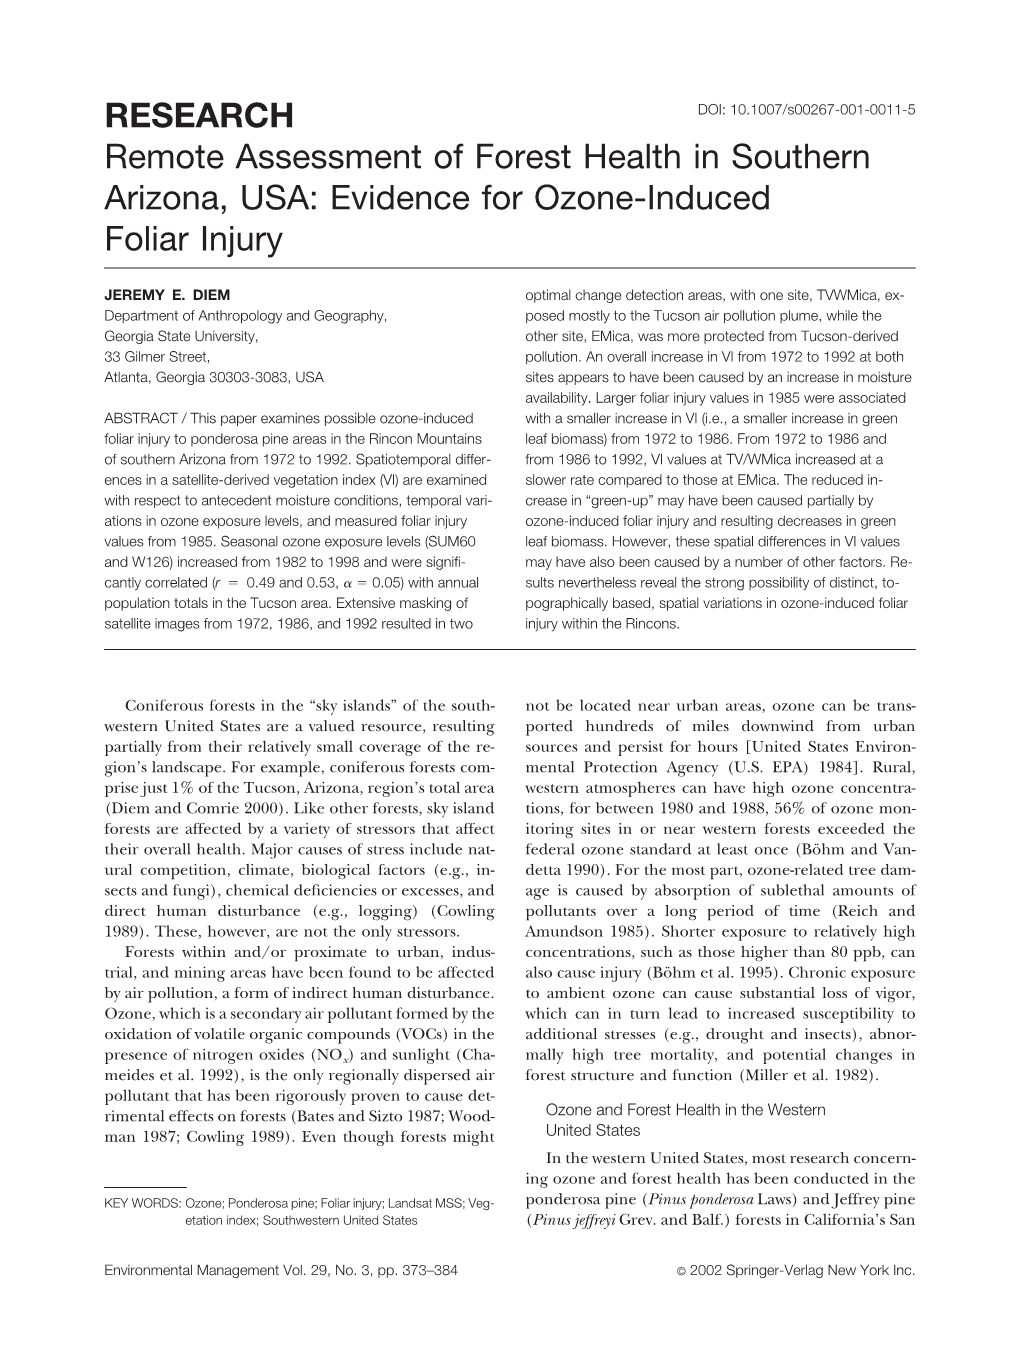 Evidence for Ozone-Induced Foliar Injury